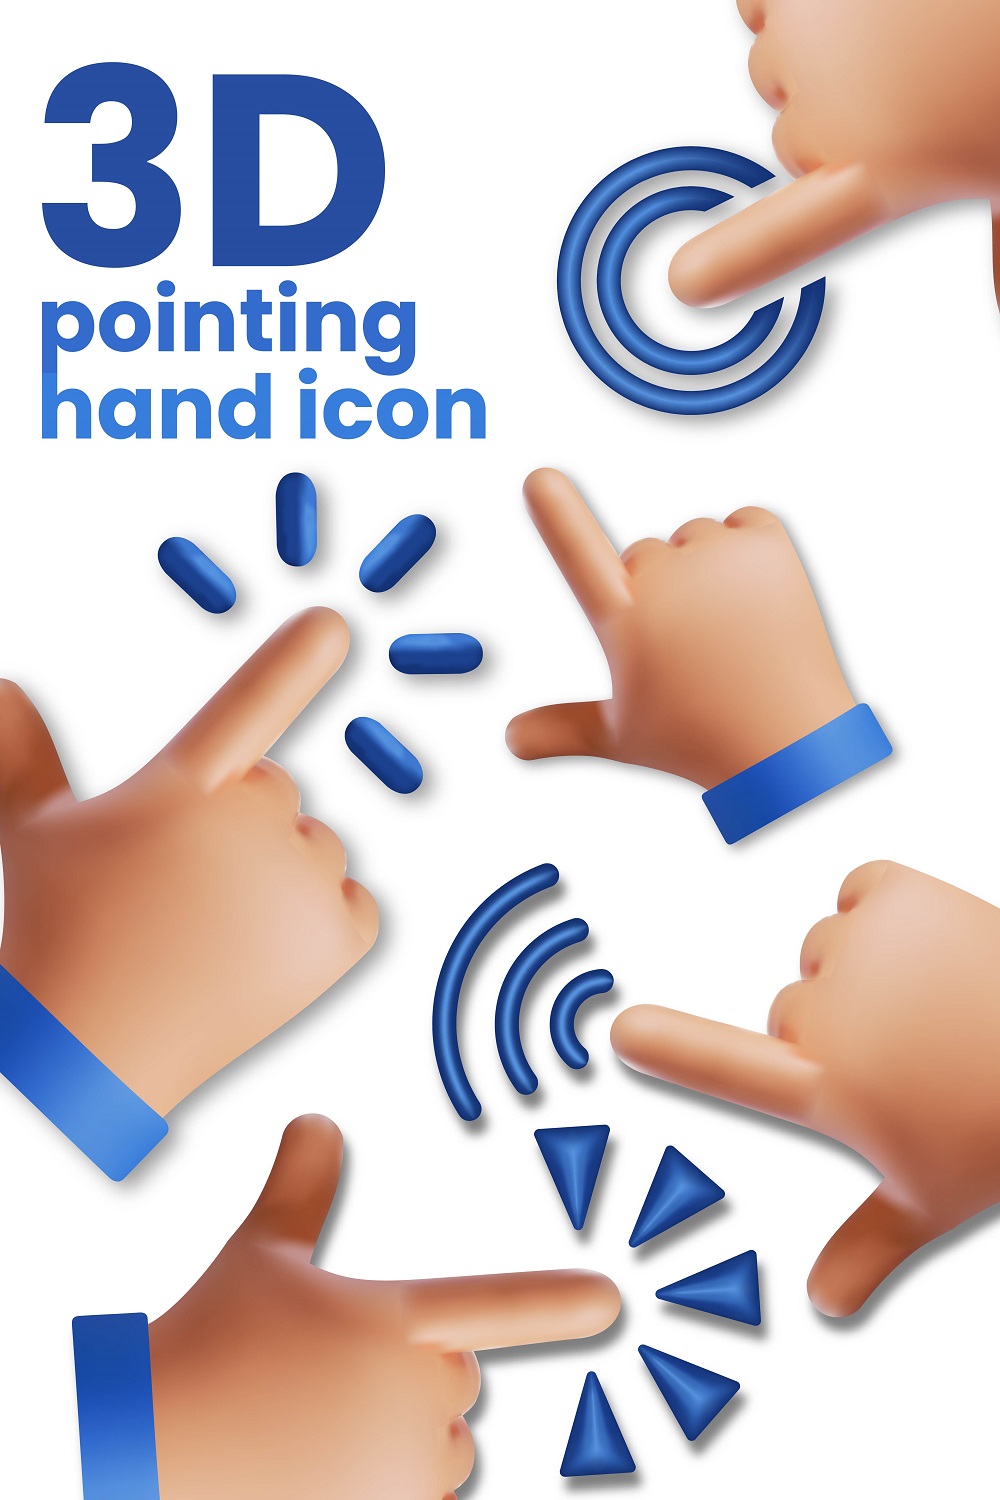 Hand point click online modern digital technology icon, online